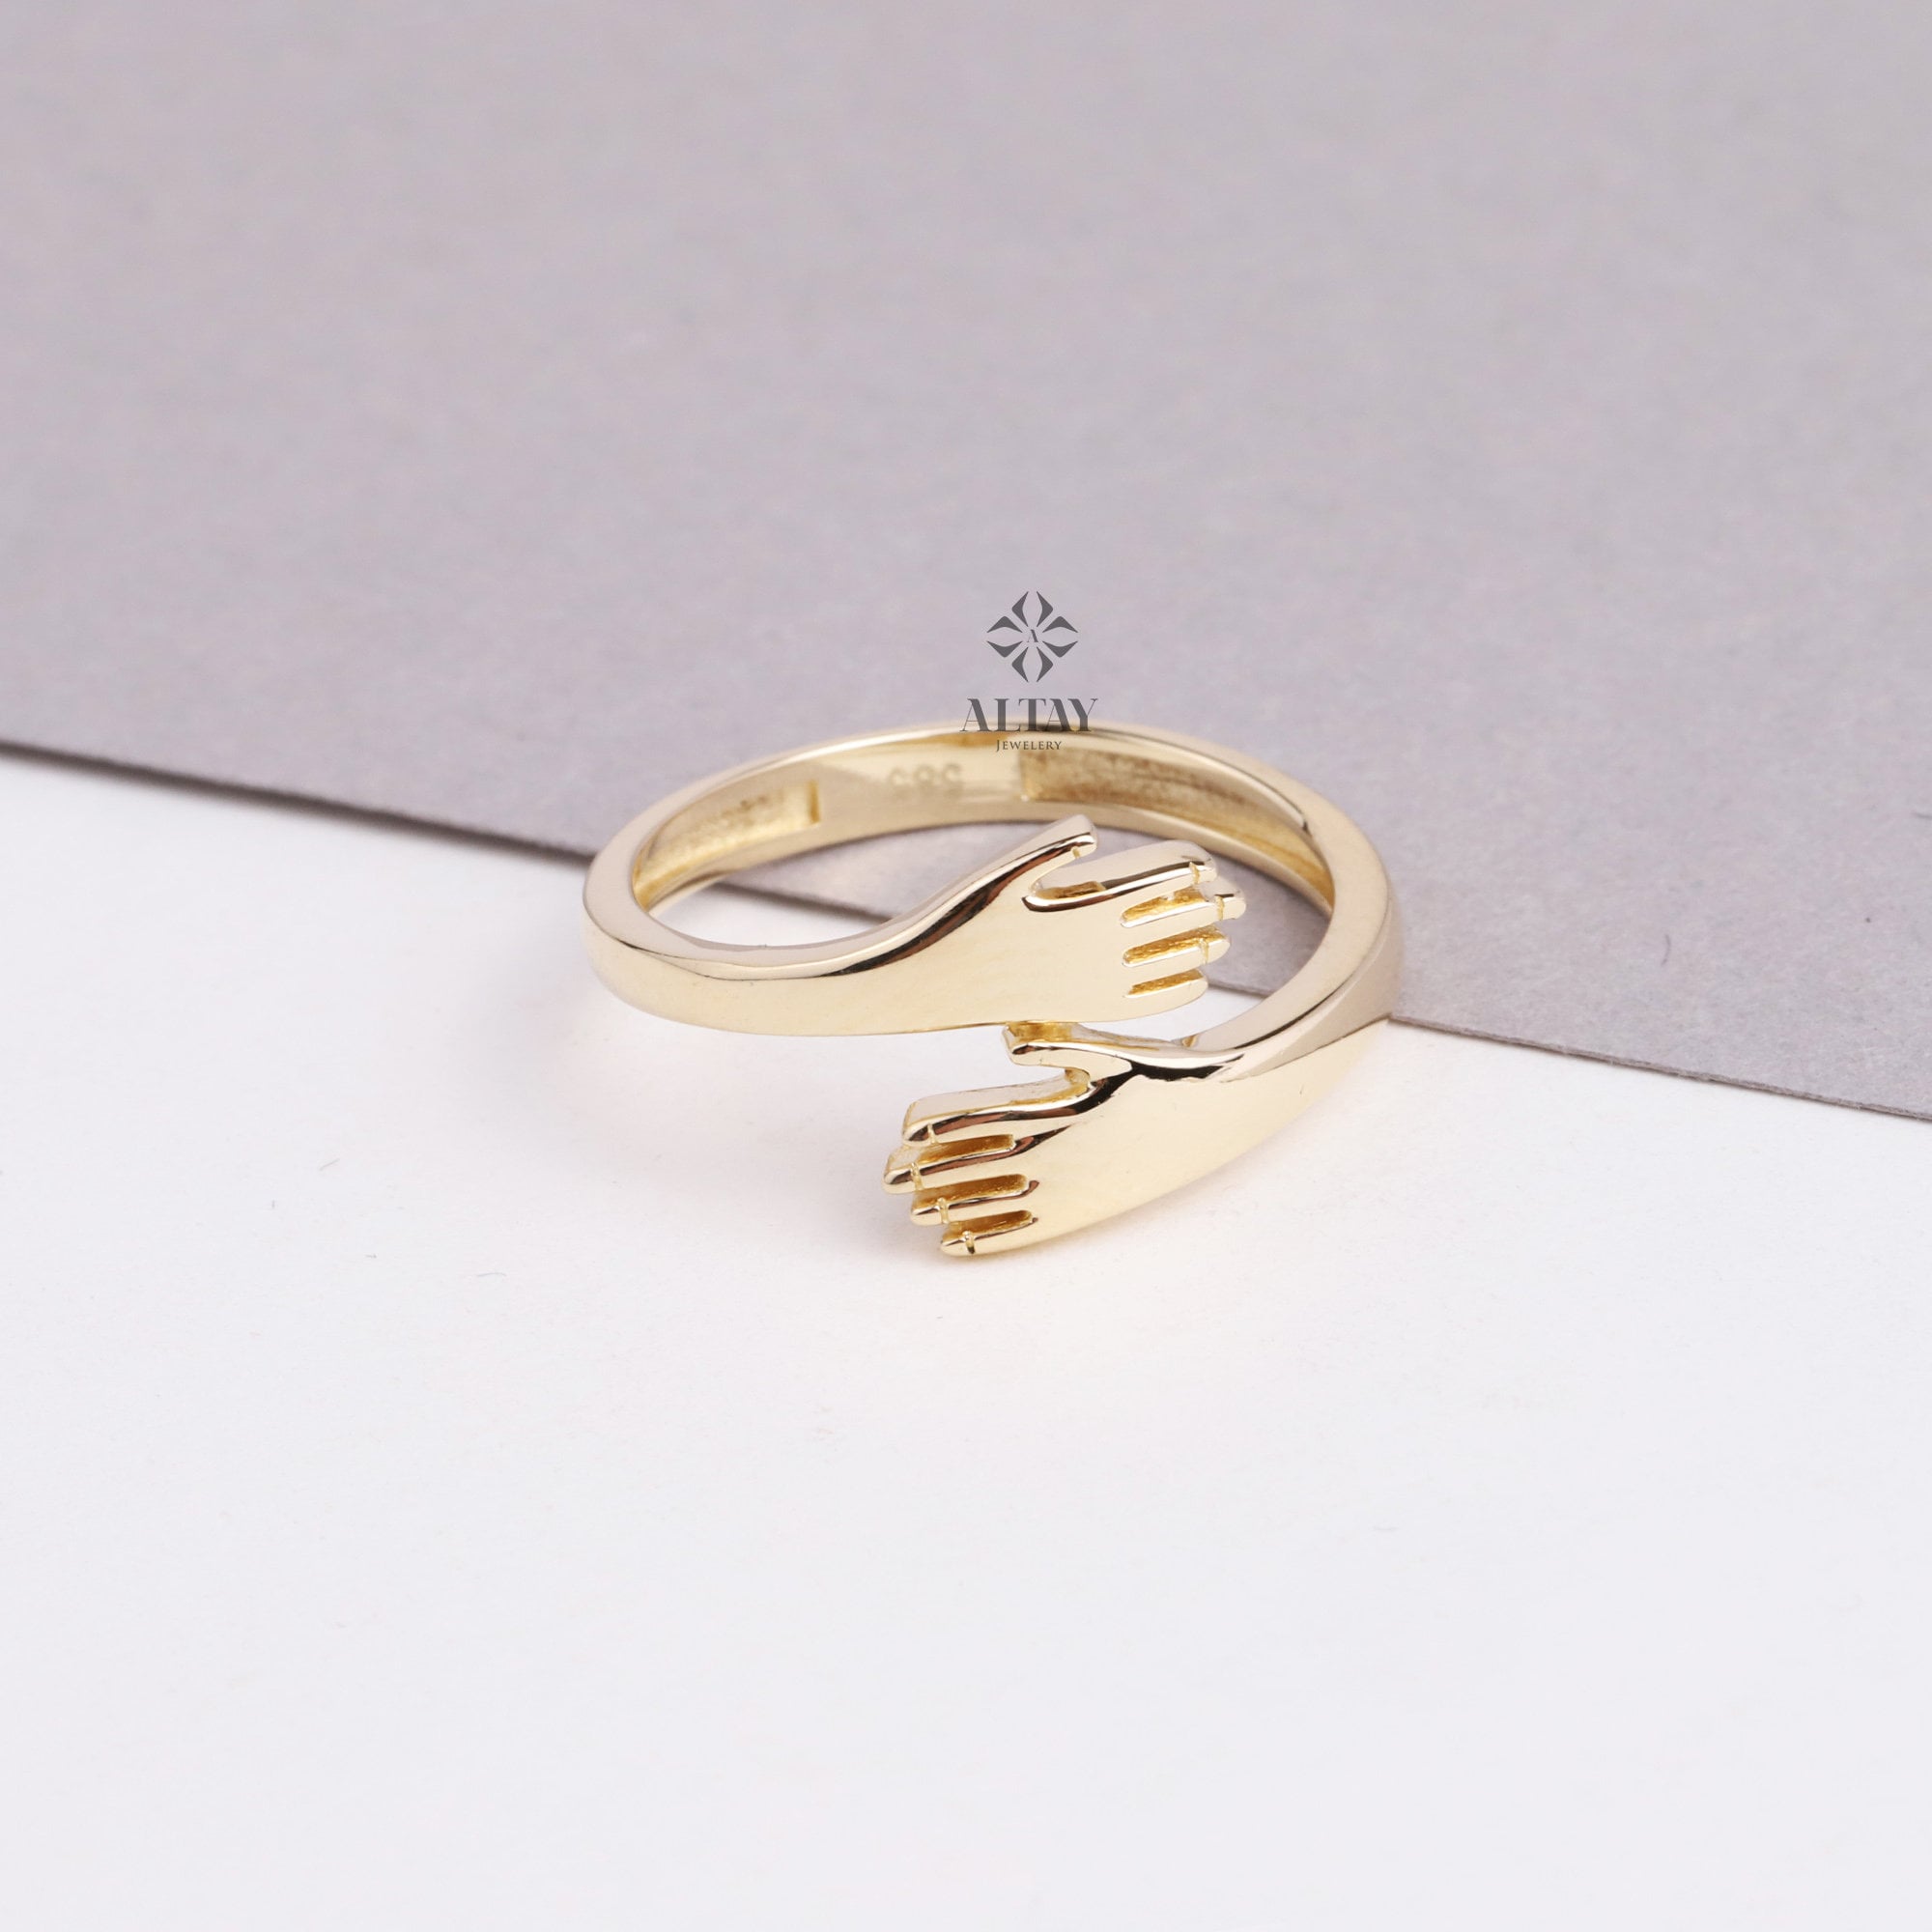 XIAQUJ Zircon Line Opening Adjustable Ring in dex Finger Ring for Girlfriend  Gift Rings Gold - Walmart.com